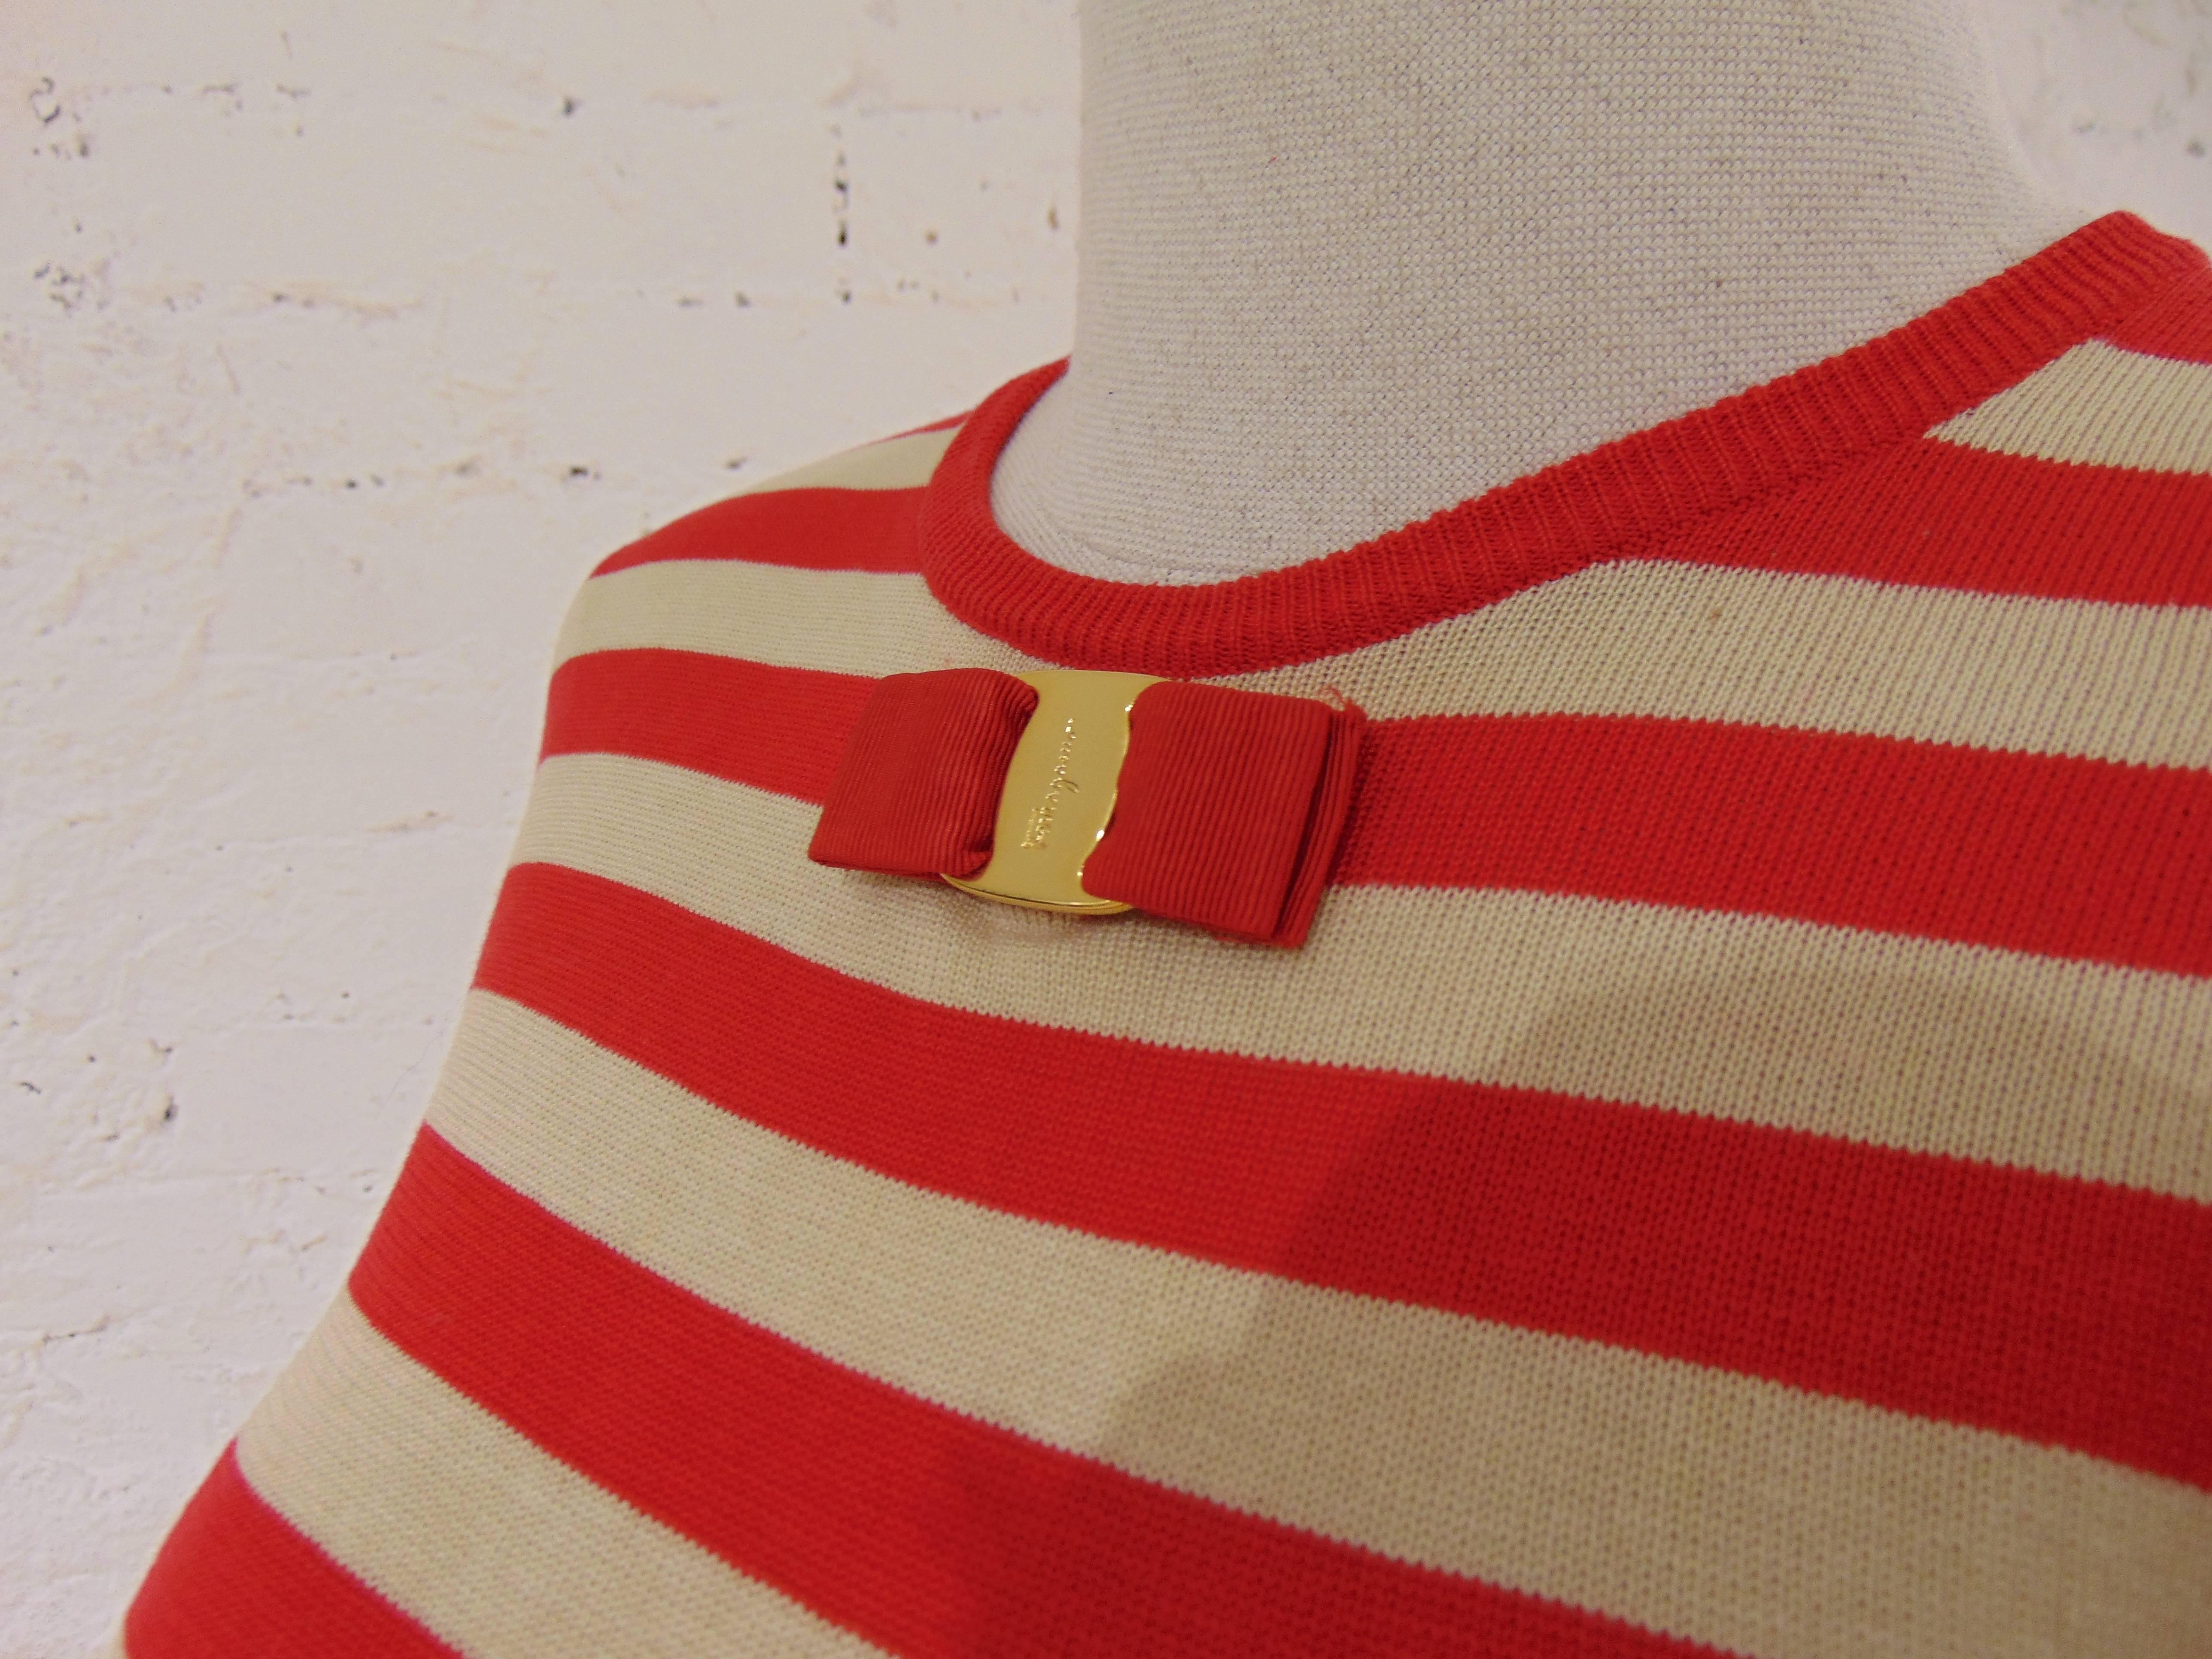 Salvatore Ferragamo red cream stripes short sleeves cotton shirt In Excellent Condition For Sale In Capri, IT